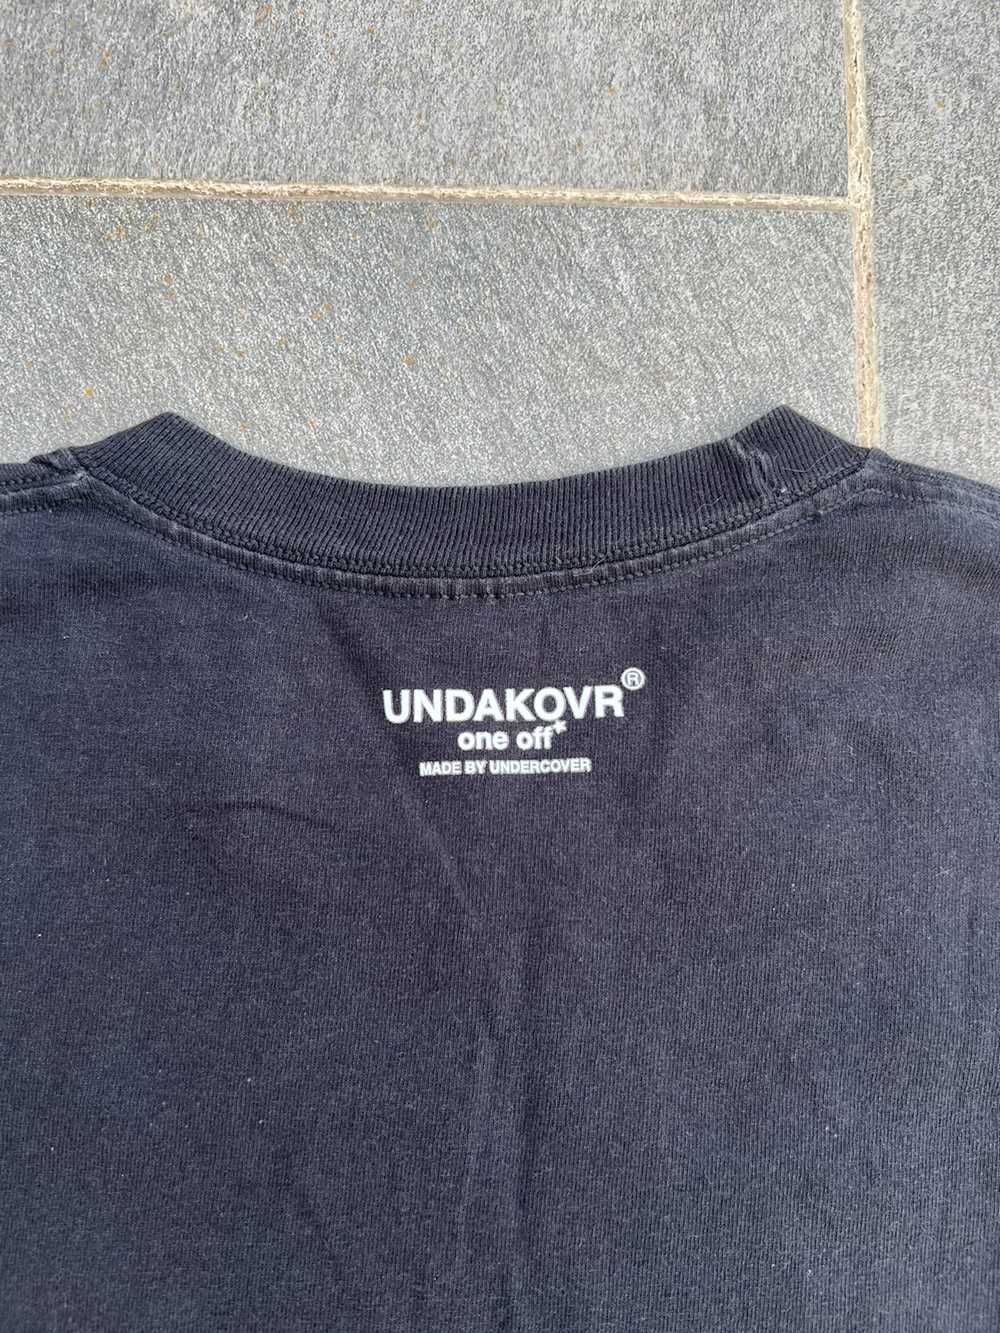 Undercover Undakovr One-Off Opposites Attract Tee - image 6